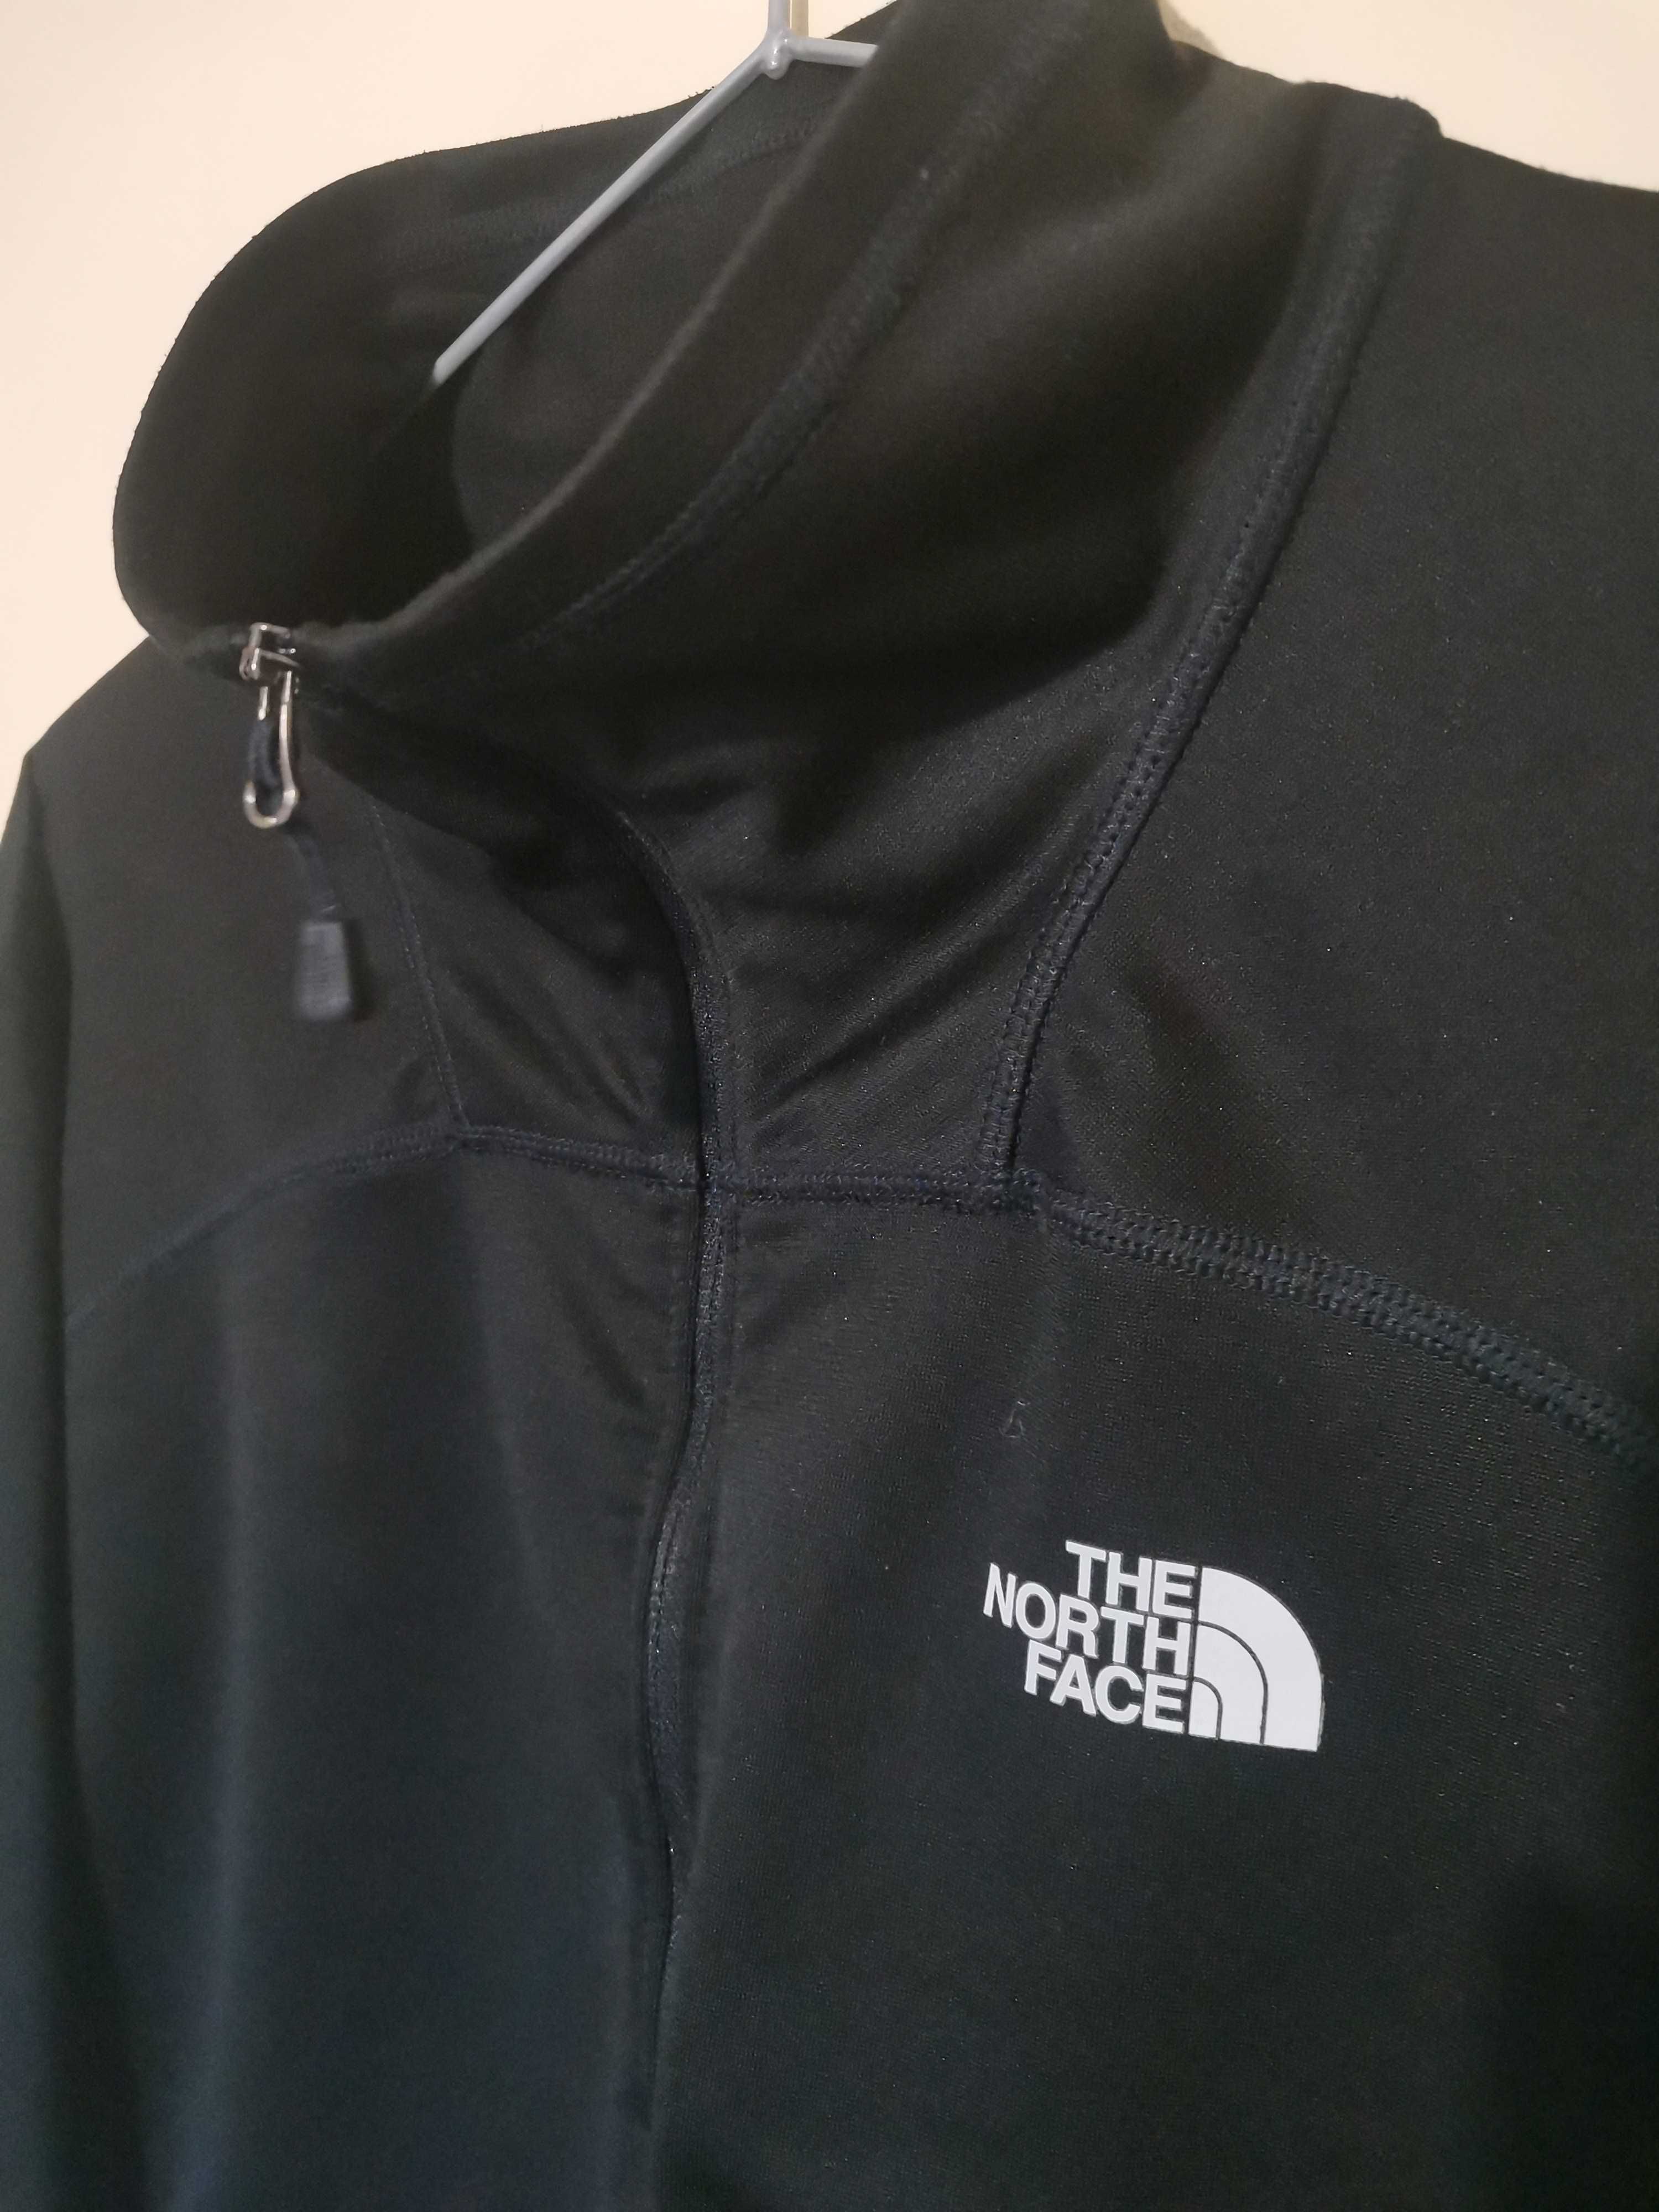 The North Face Full-zip Sweatshirt.